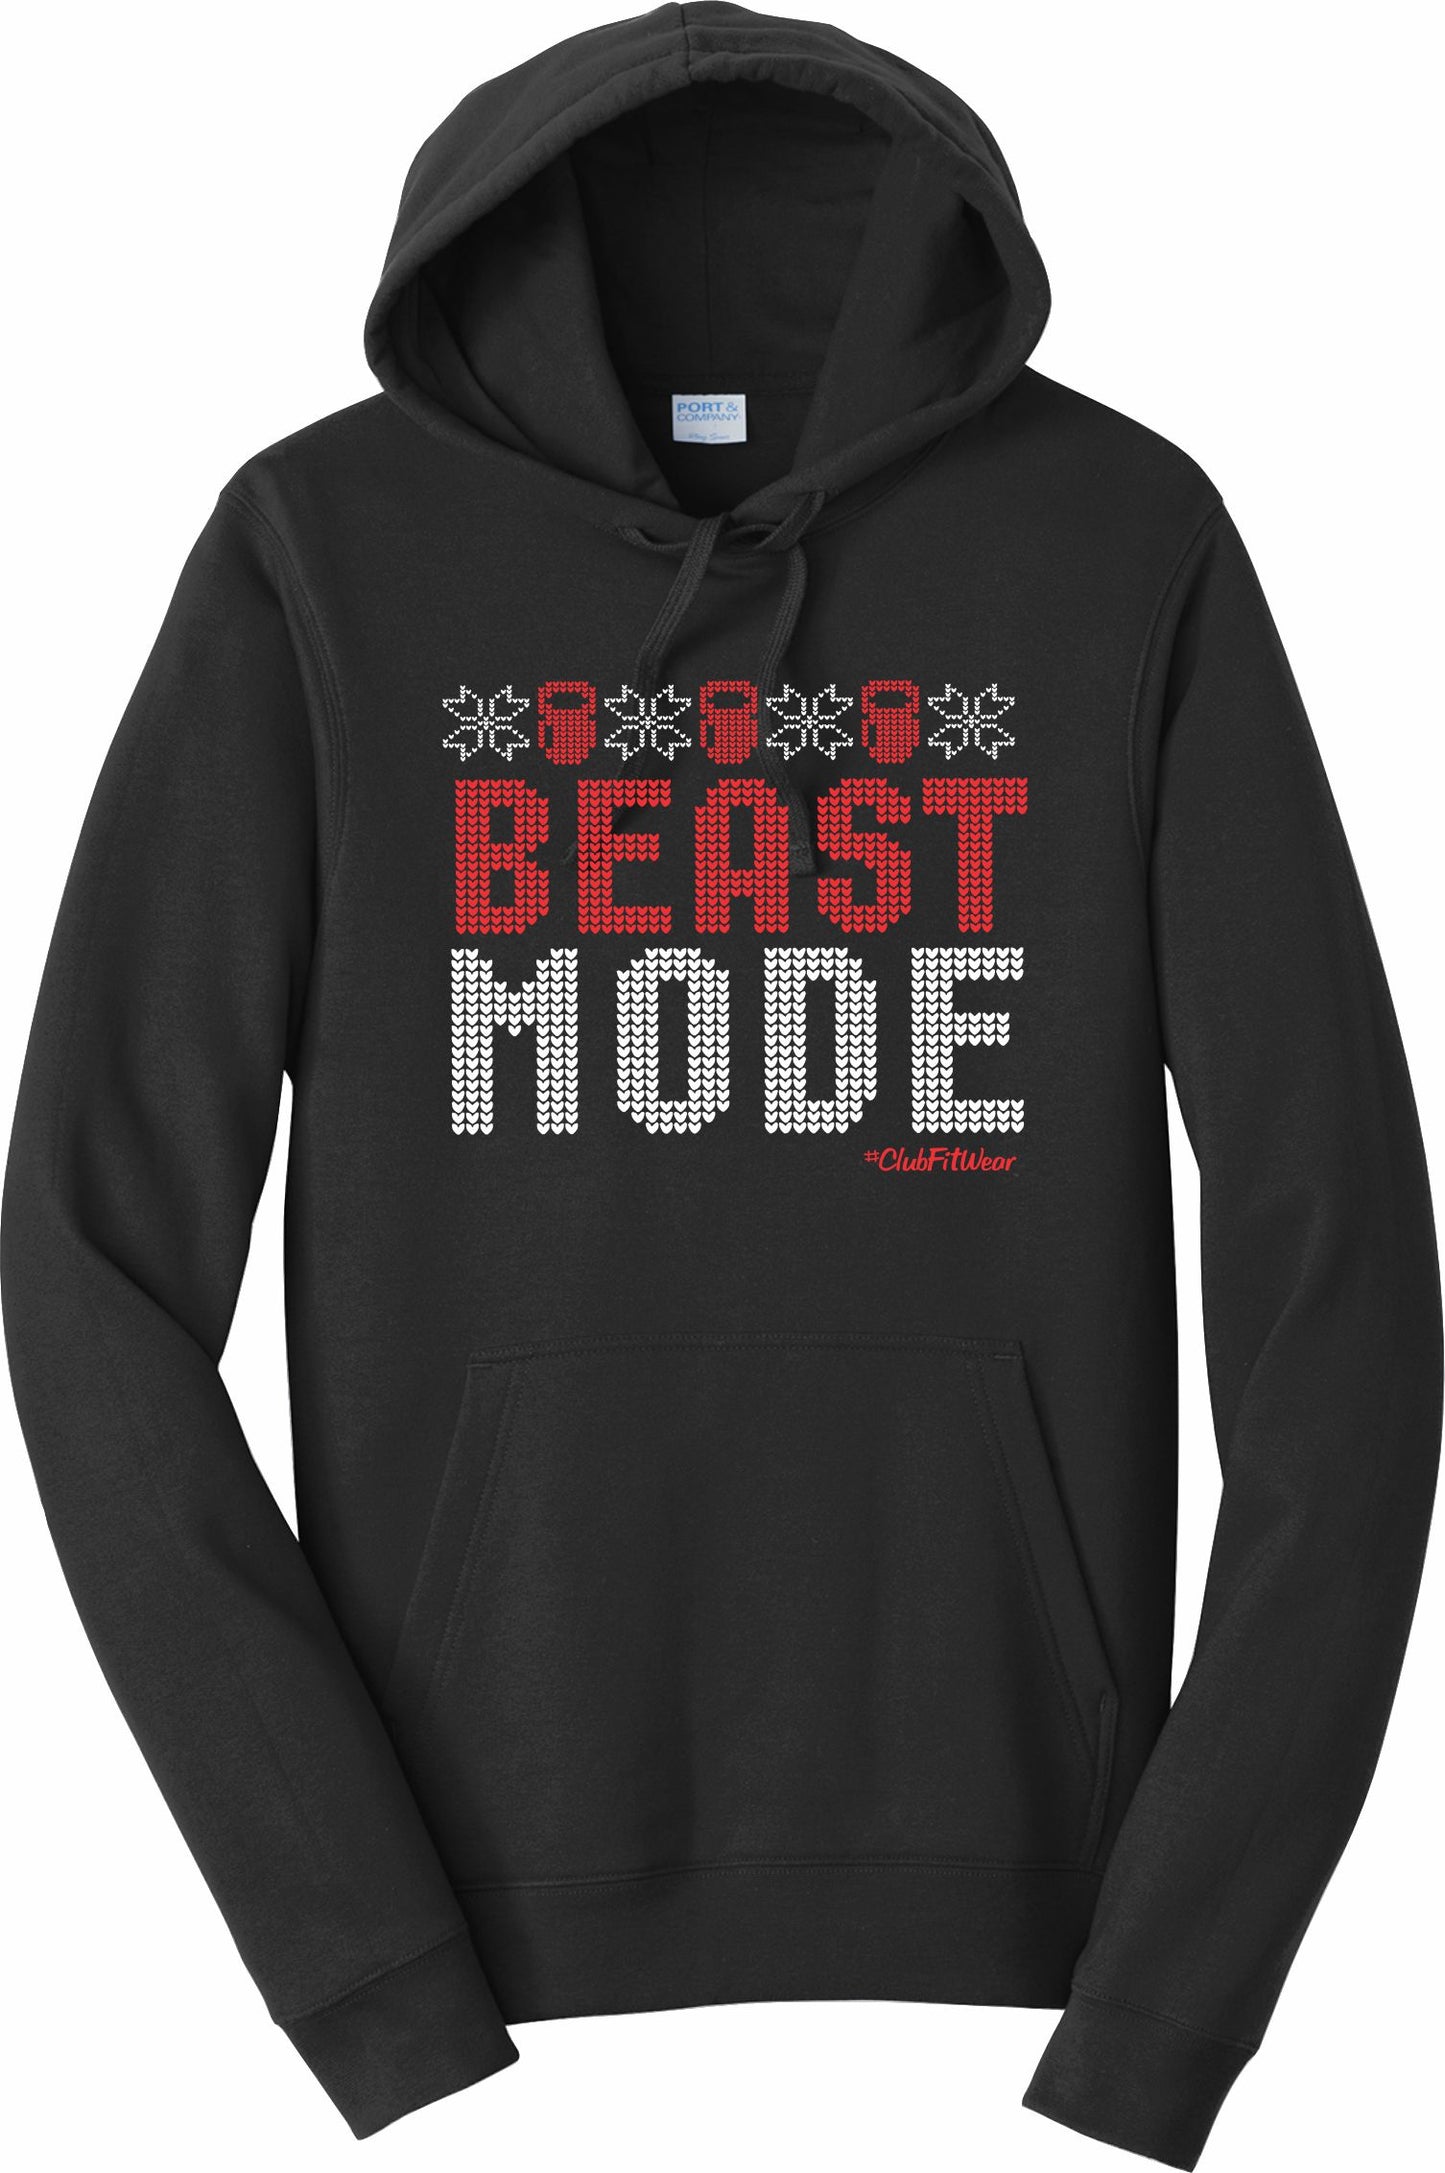 Holiday Beast Mode - Hoodie